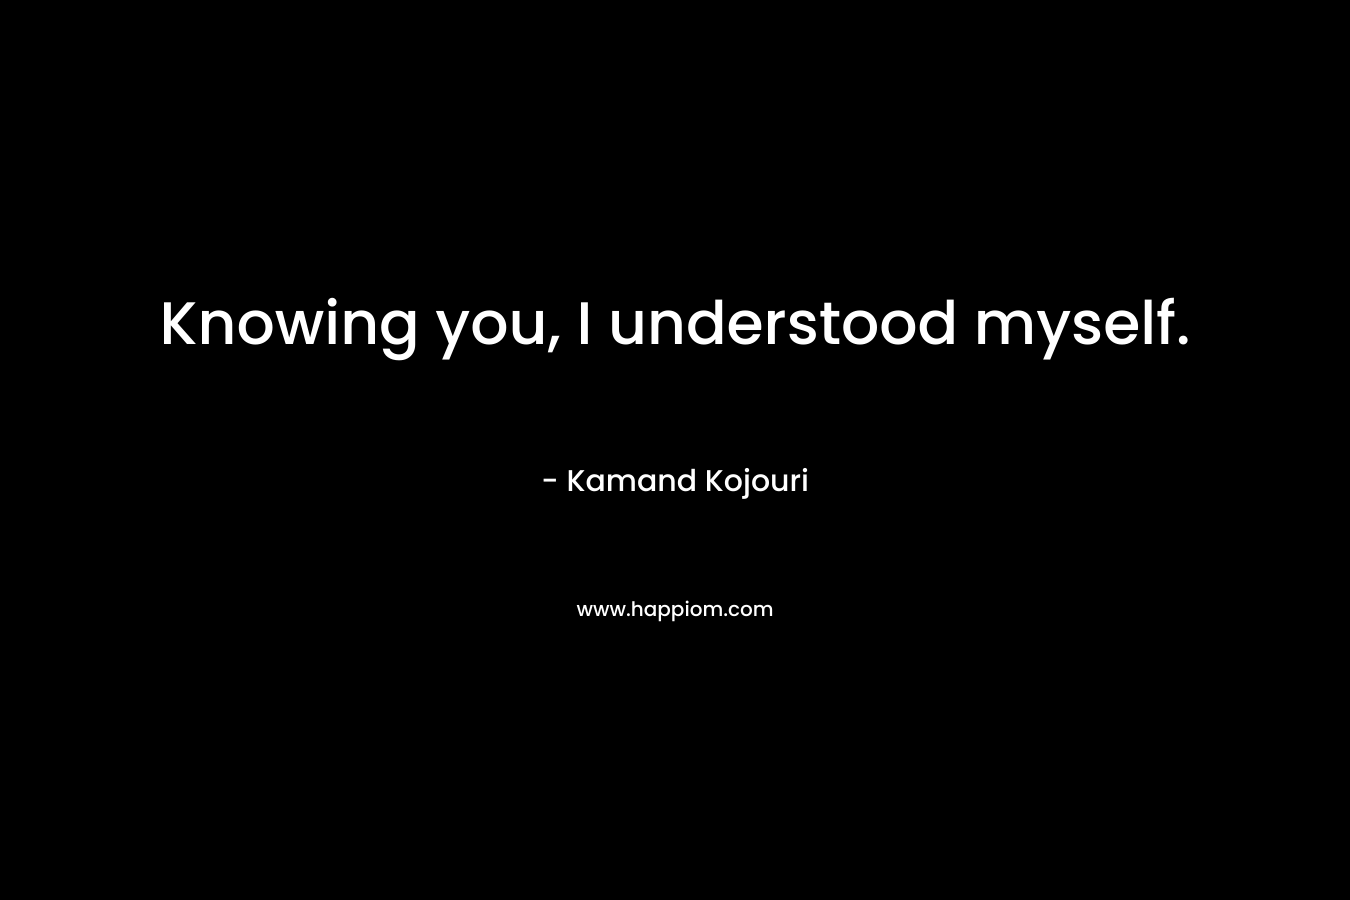 Knowing you, I understood myself.